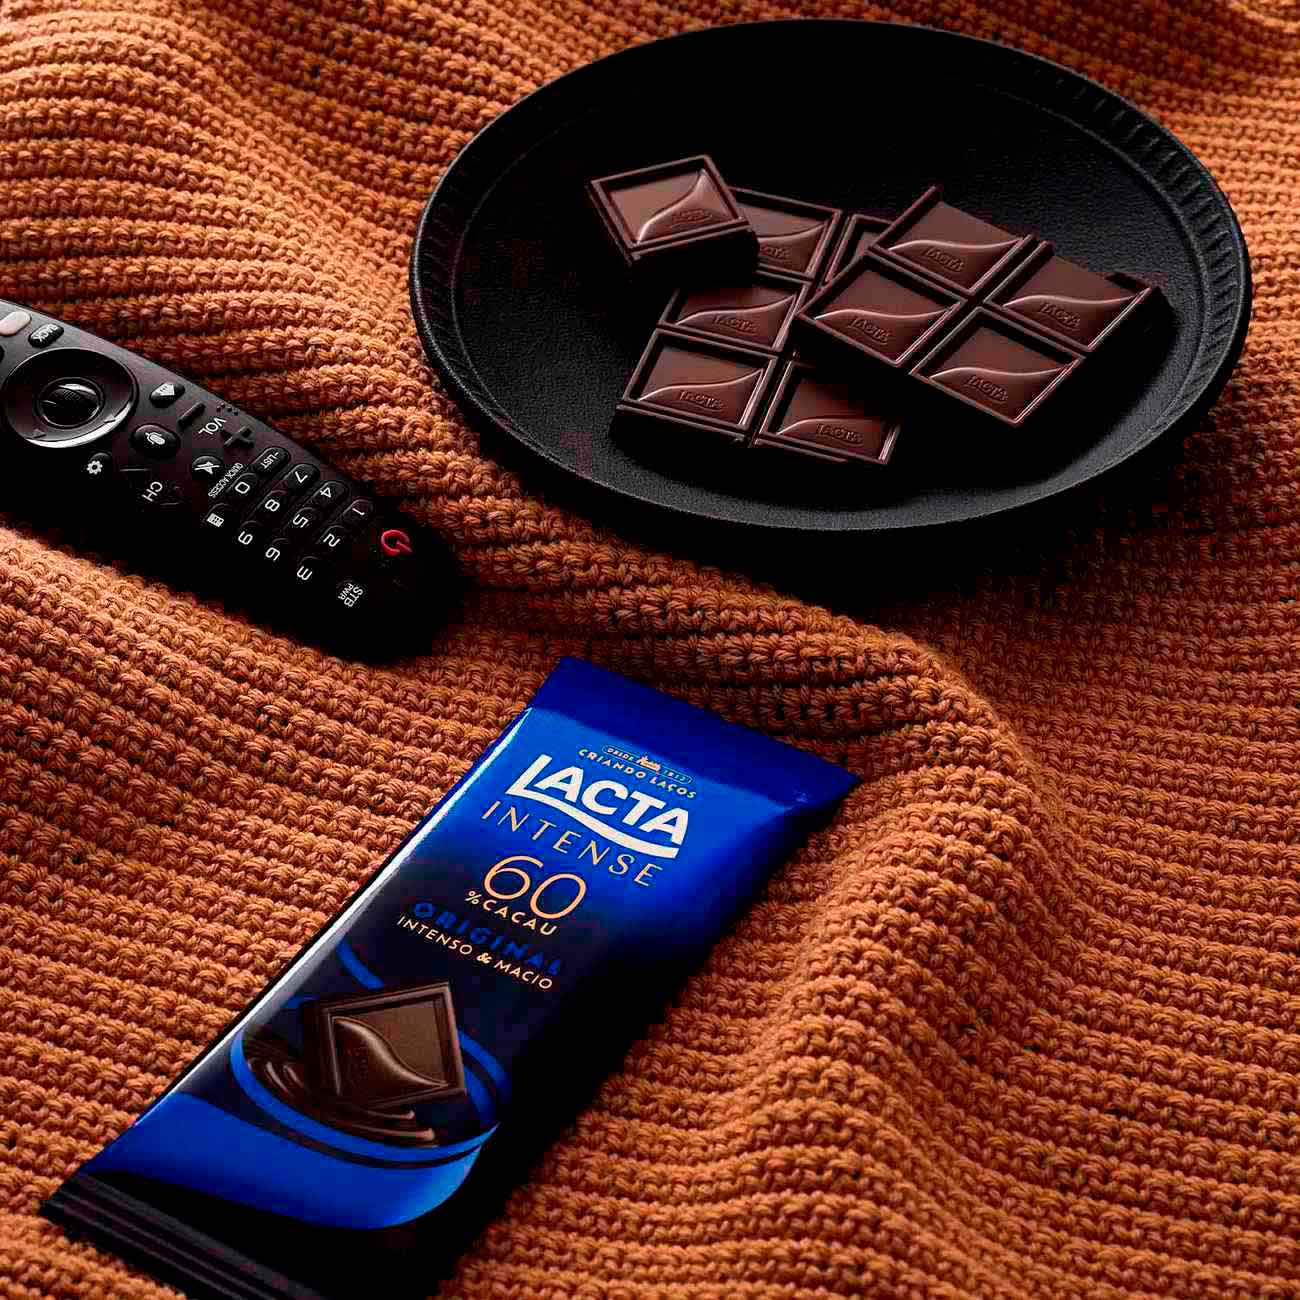 Barra de Chocolate  Lacta Intense 60% Cacau Original 85g | Display 17 unidades